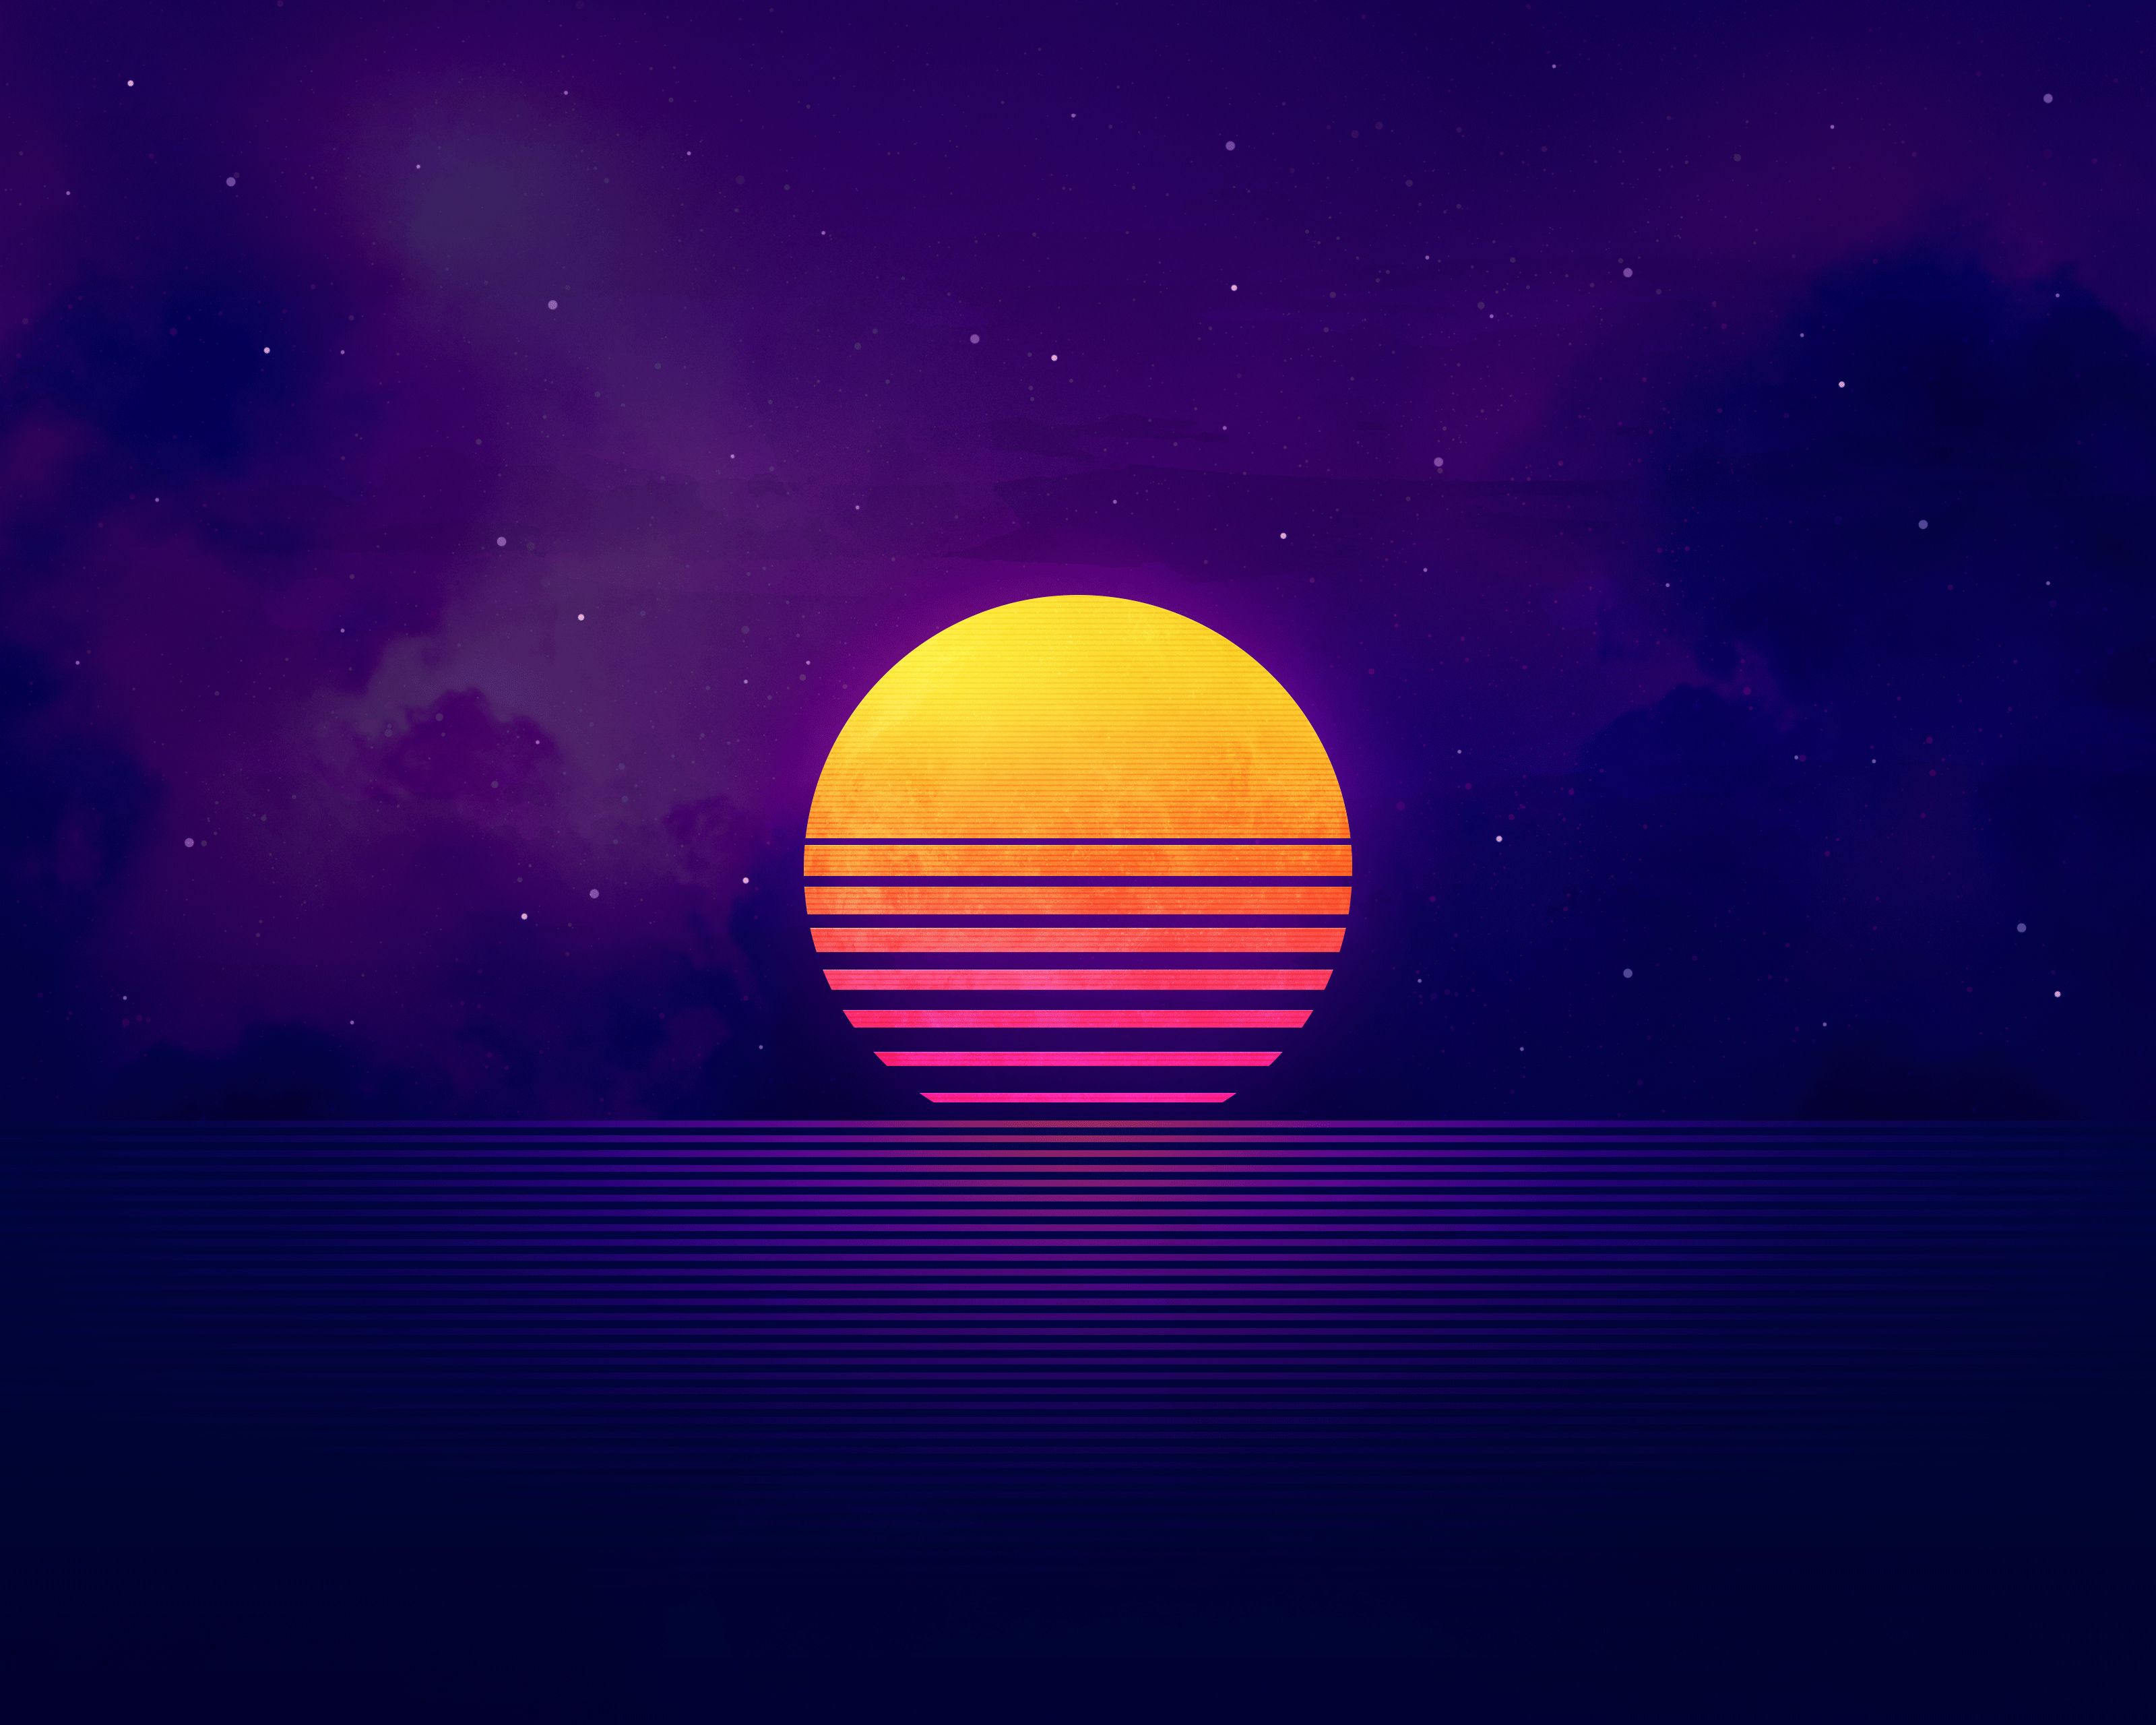 Retrowave Sunset, HD Artist, 4k Wallpaper, Image, Background